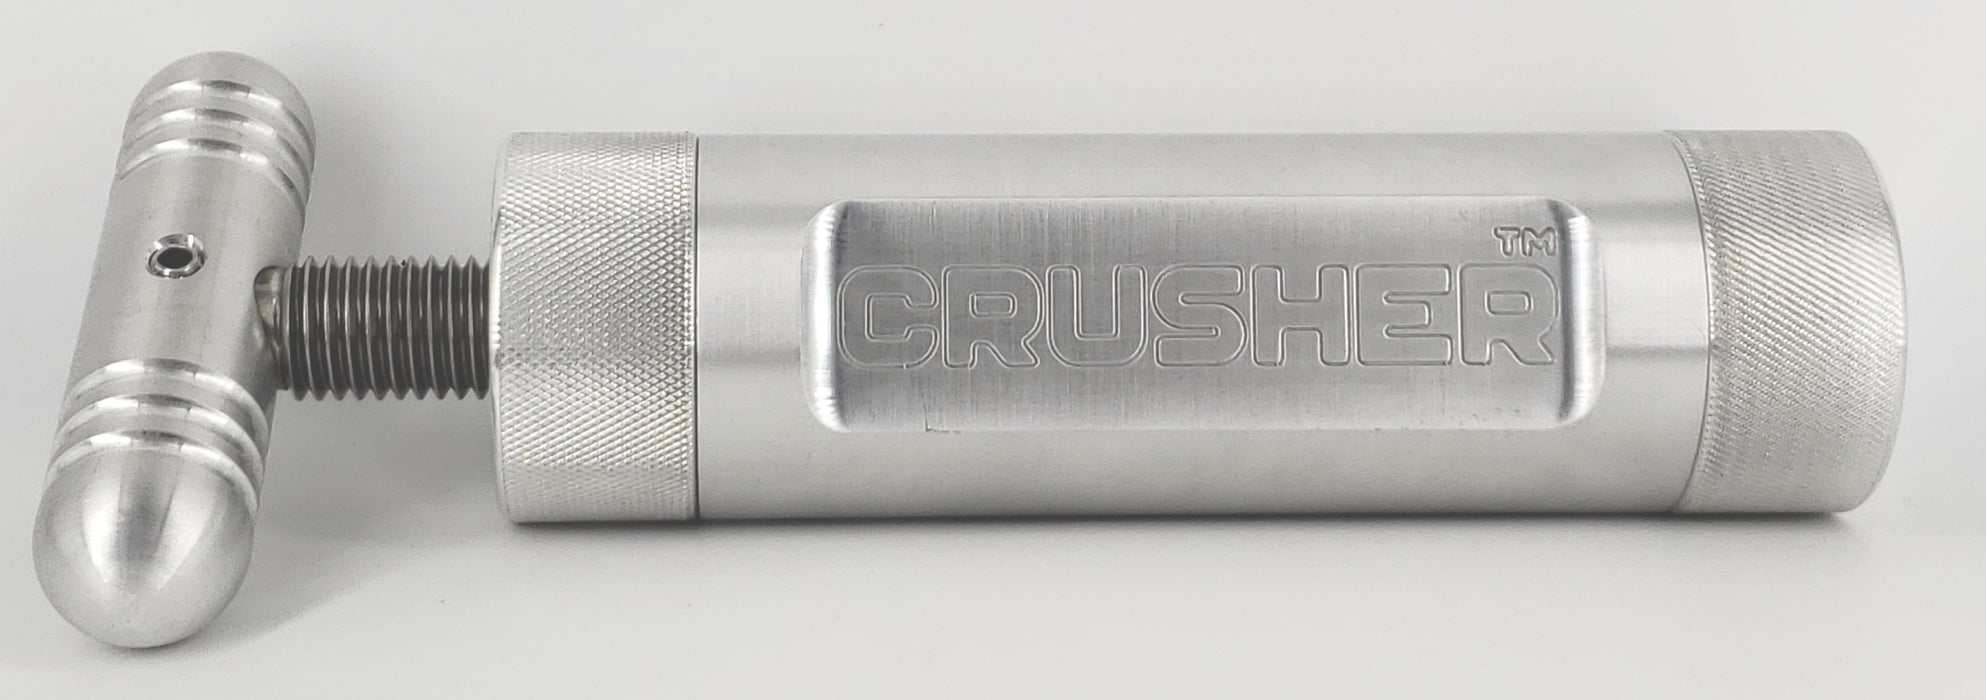 The Crusher - World's toughest Hand Press! NEW